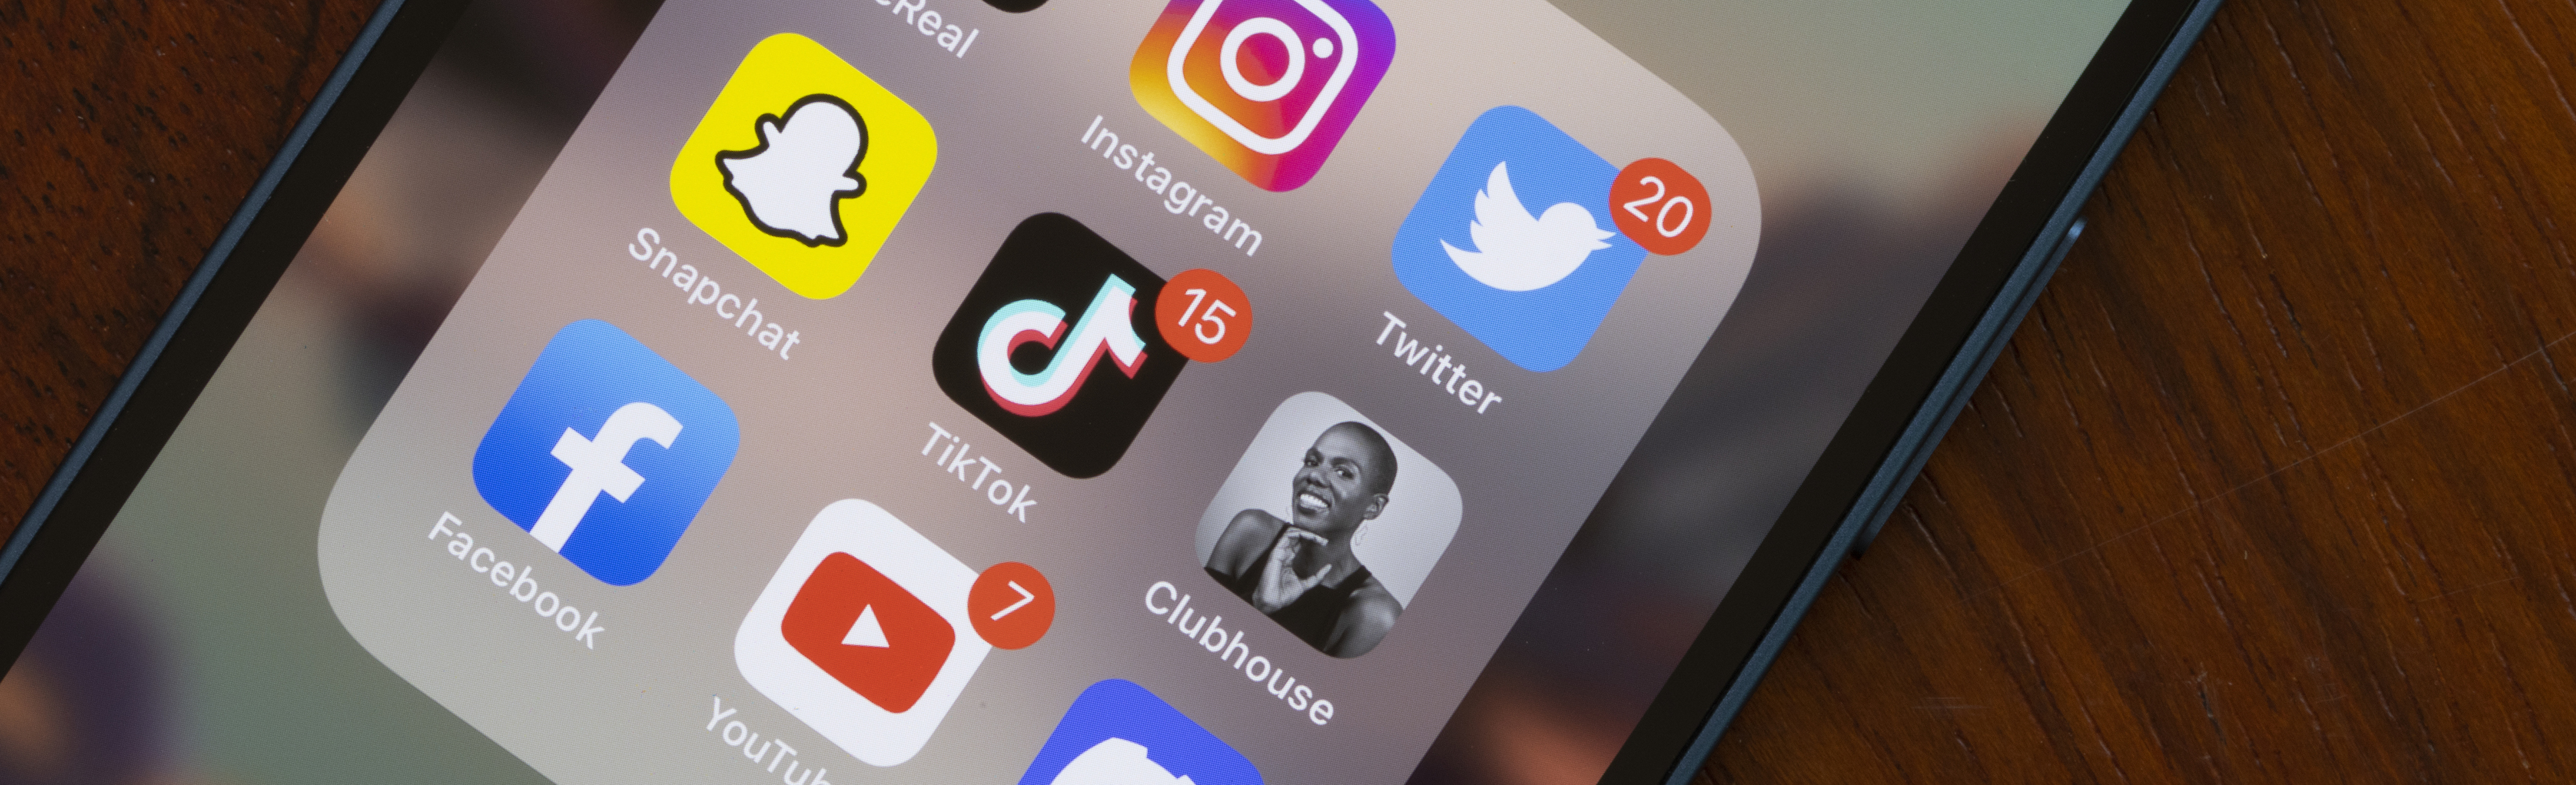 Smartphone screen displaying social media icons